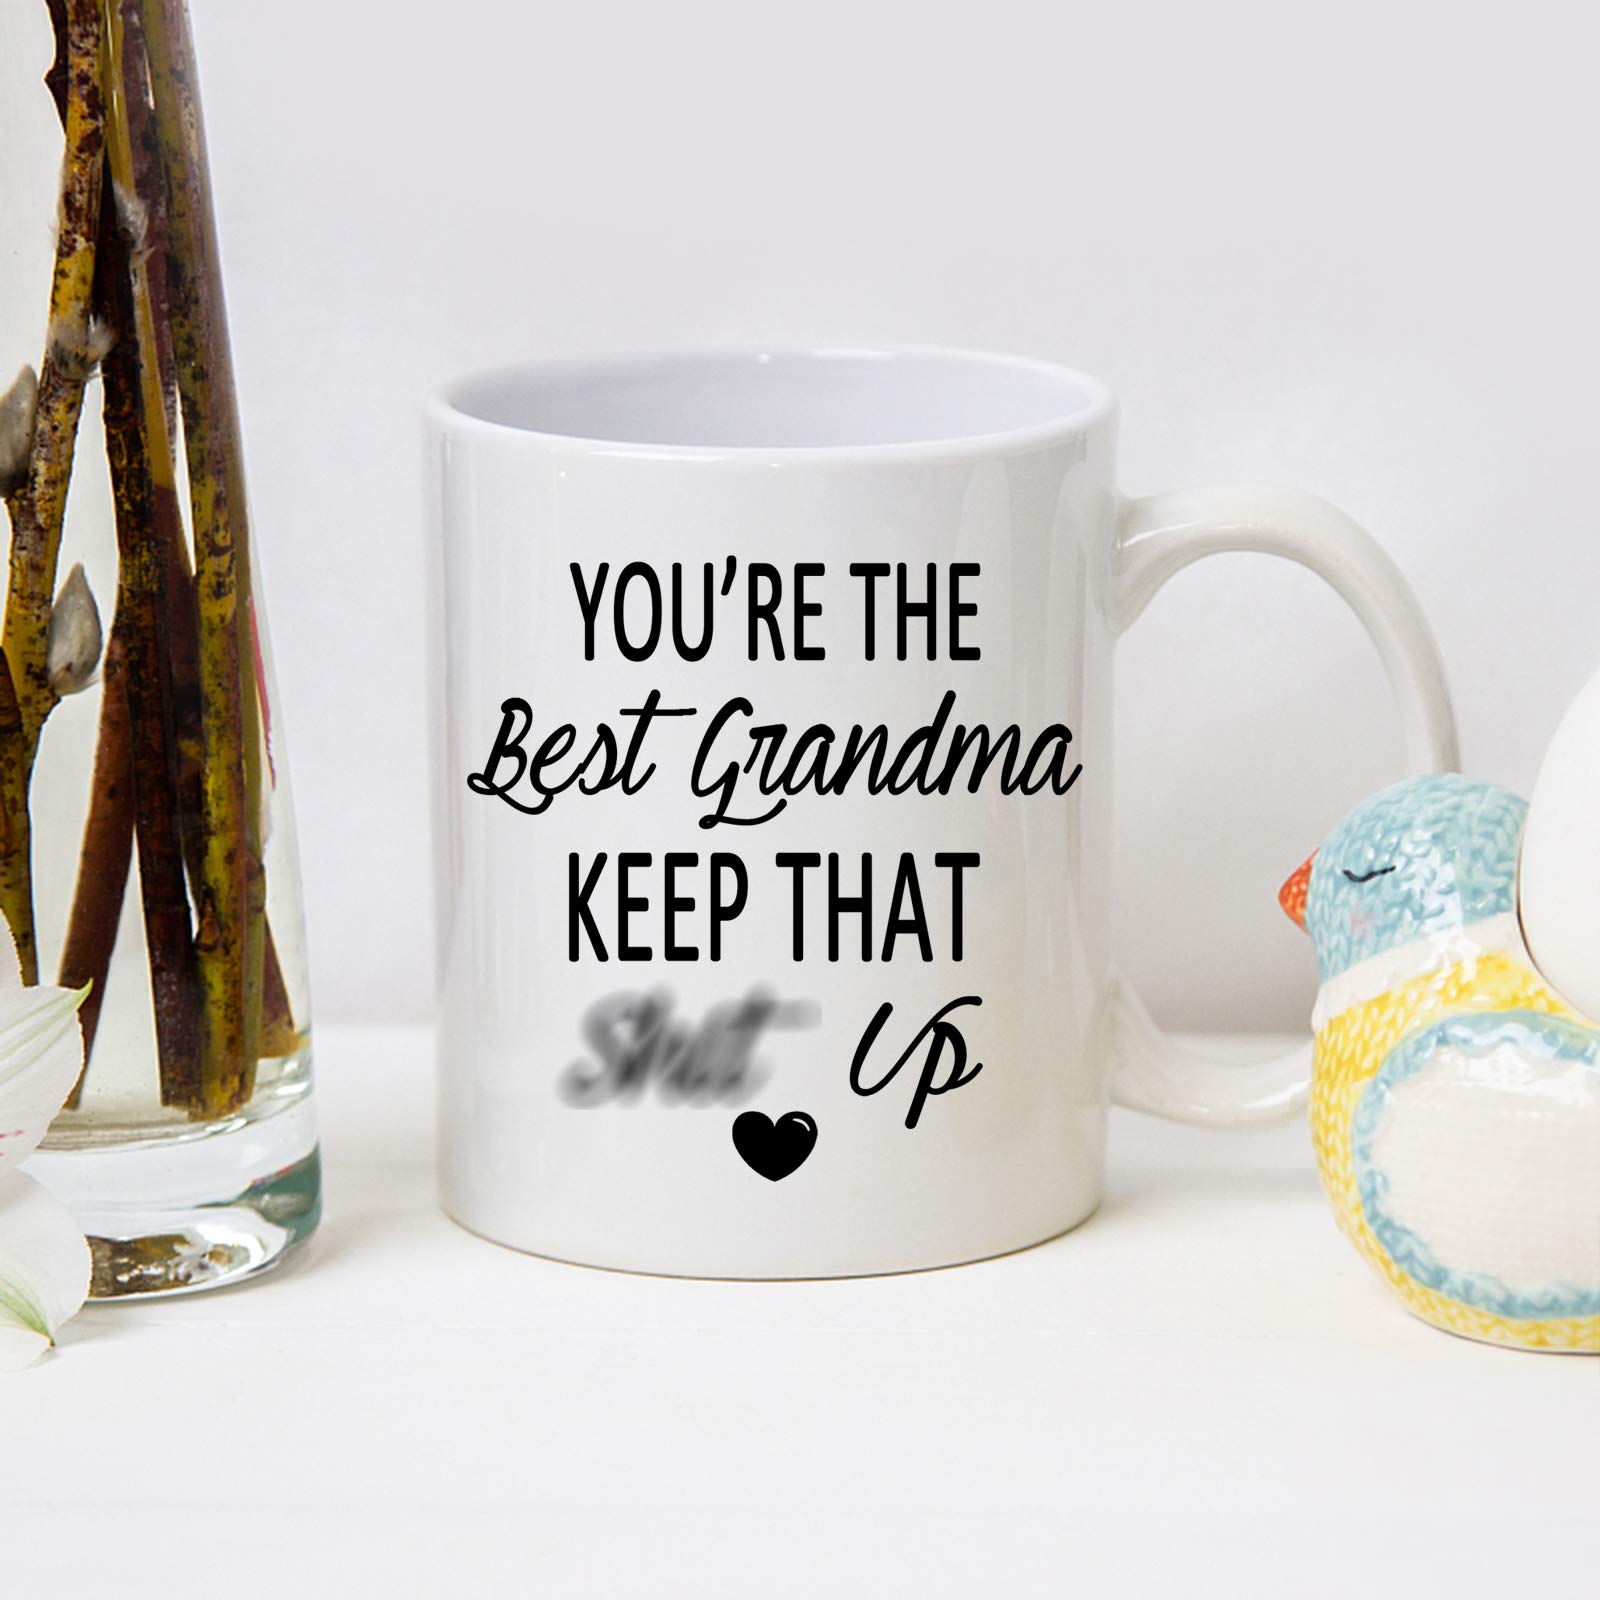 You're The Best Grandma Keep That Coffee Mug Funny Coffee Mug for Grandma Birthday Mother's Day Gift for Grandma from Granddaughter Grandson Grandchildren Grandkids 11 Ounce White